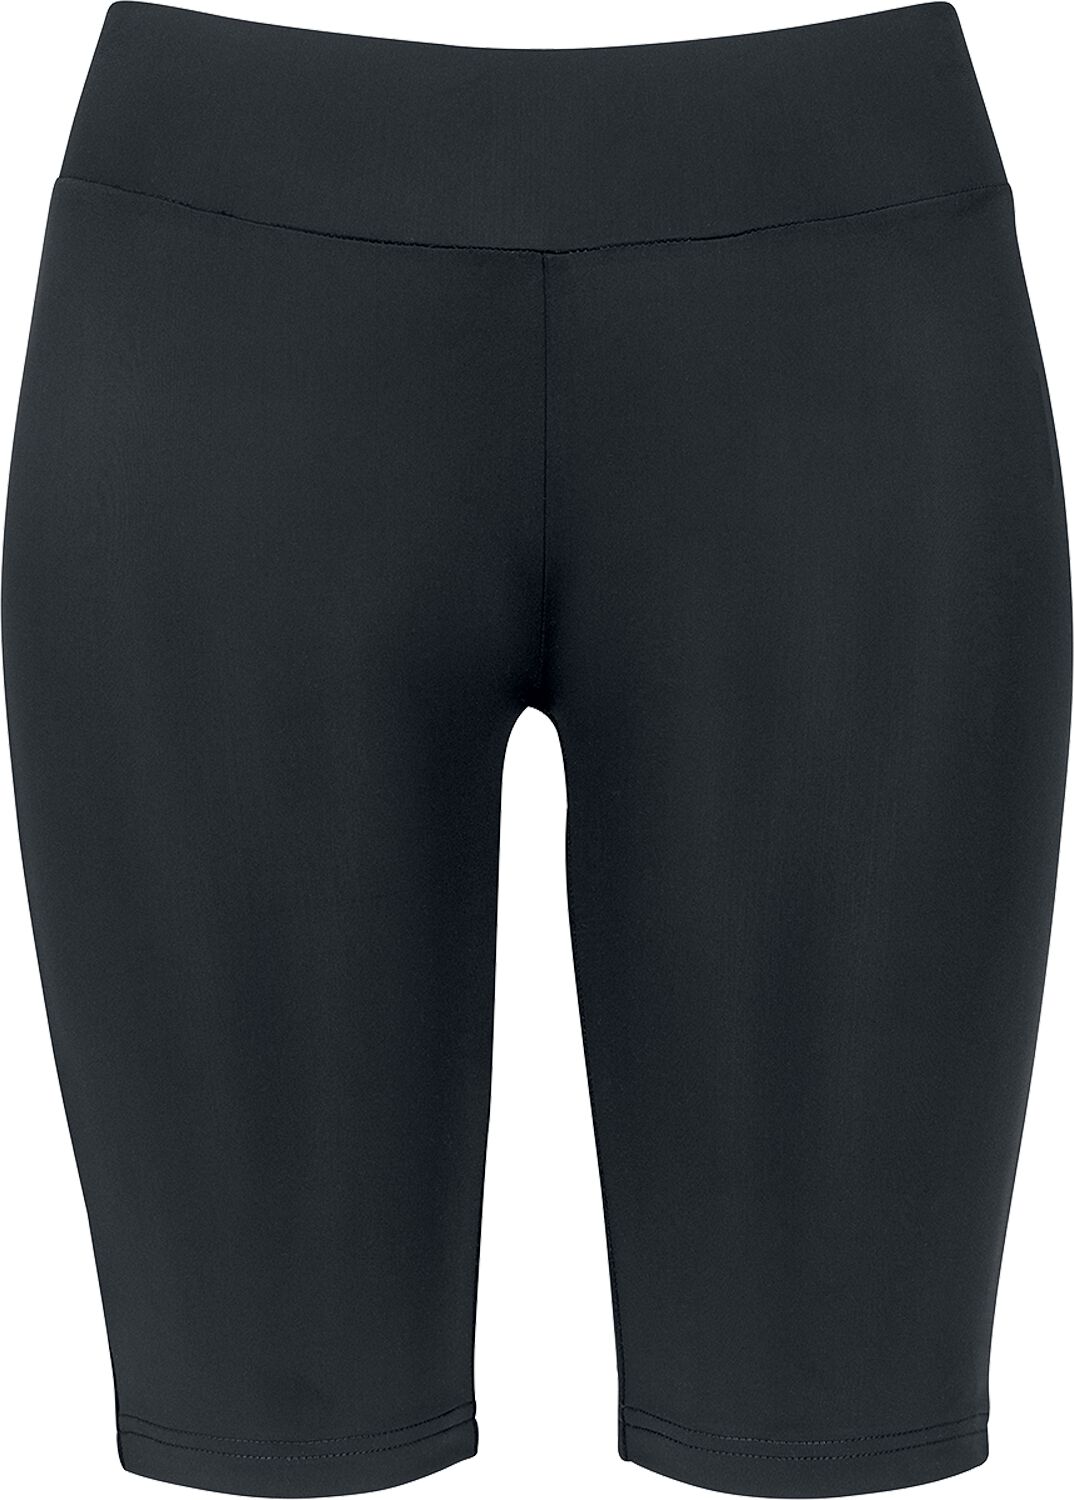 Image of Shorts di Urban Classics - Ladies Cycle Shorts - XS a XL - Donna - nero